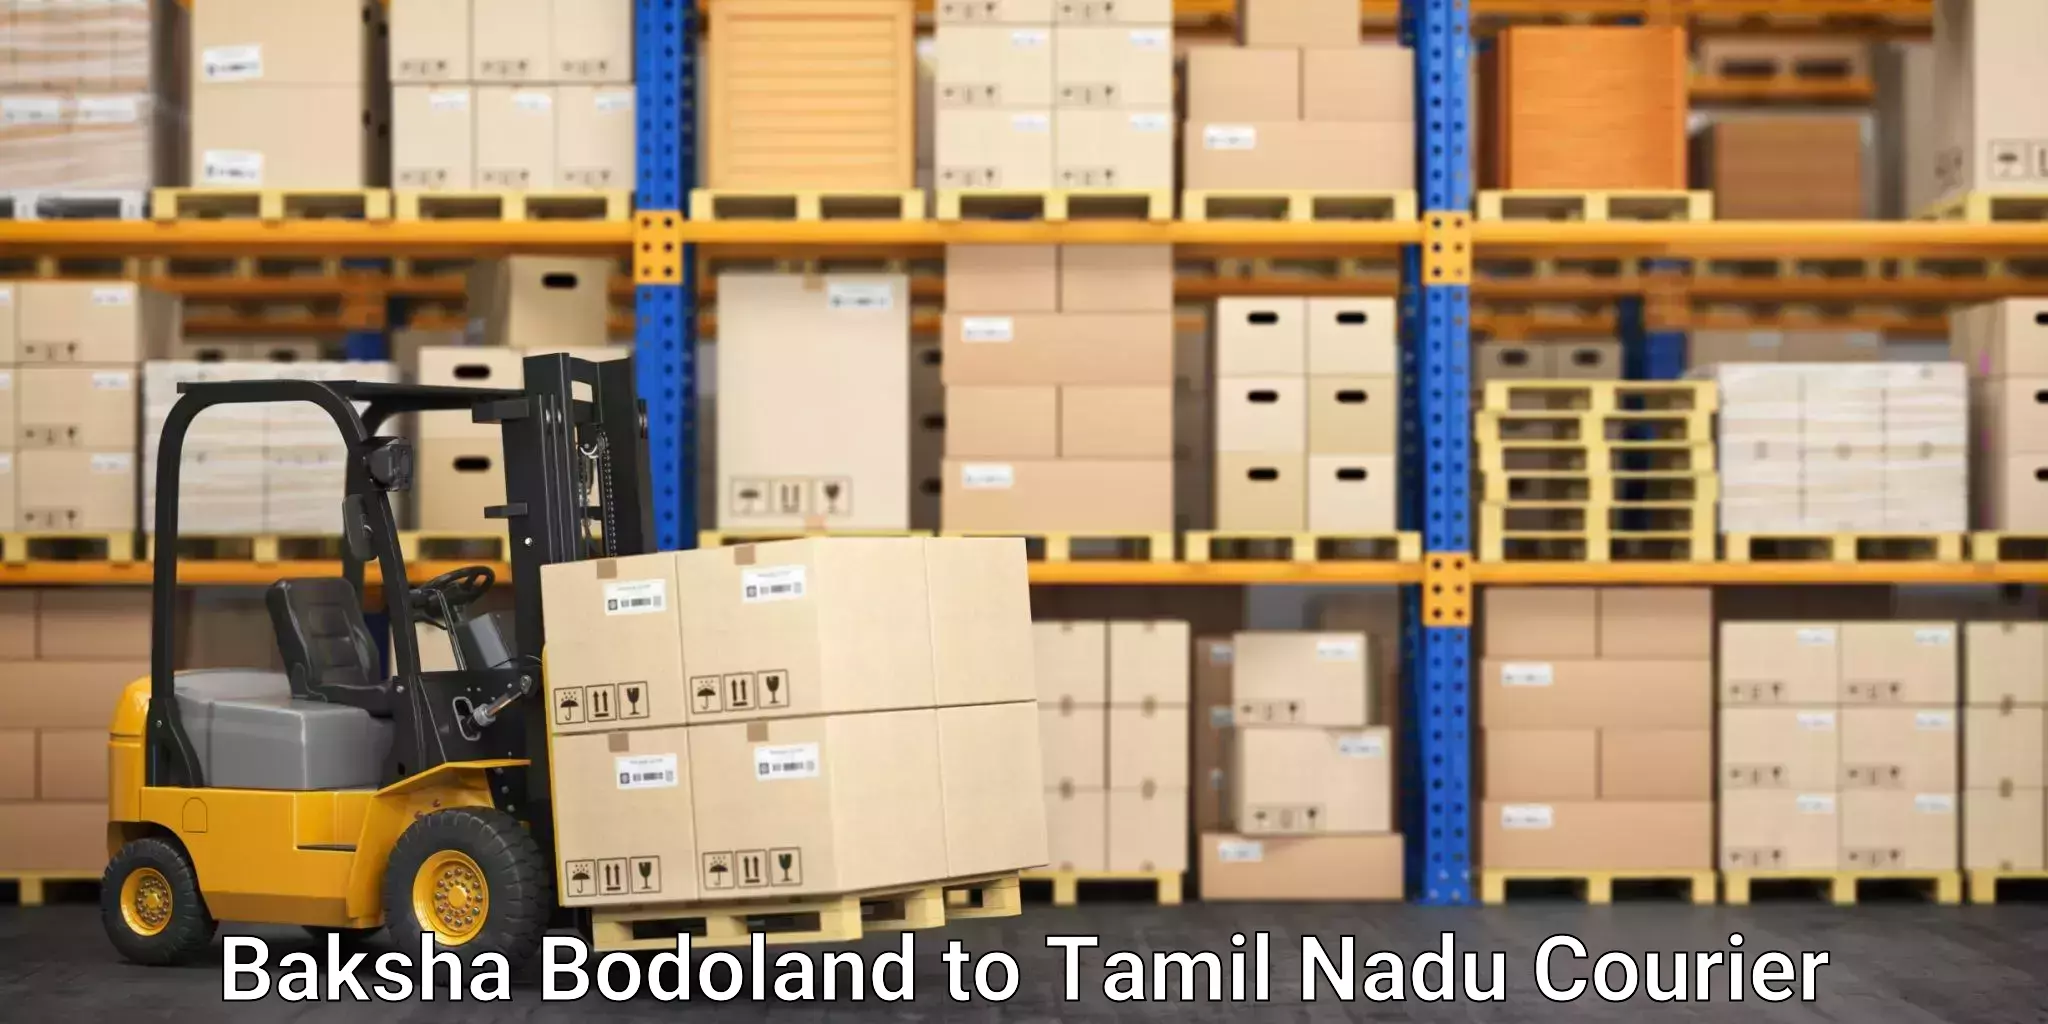 Package delivery network Baksha Bodoland to Chengalpattu